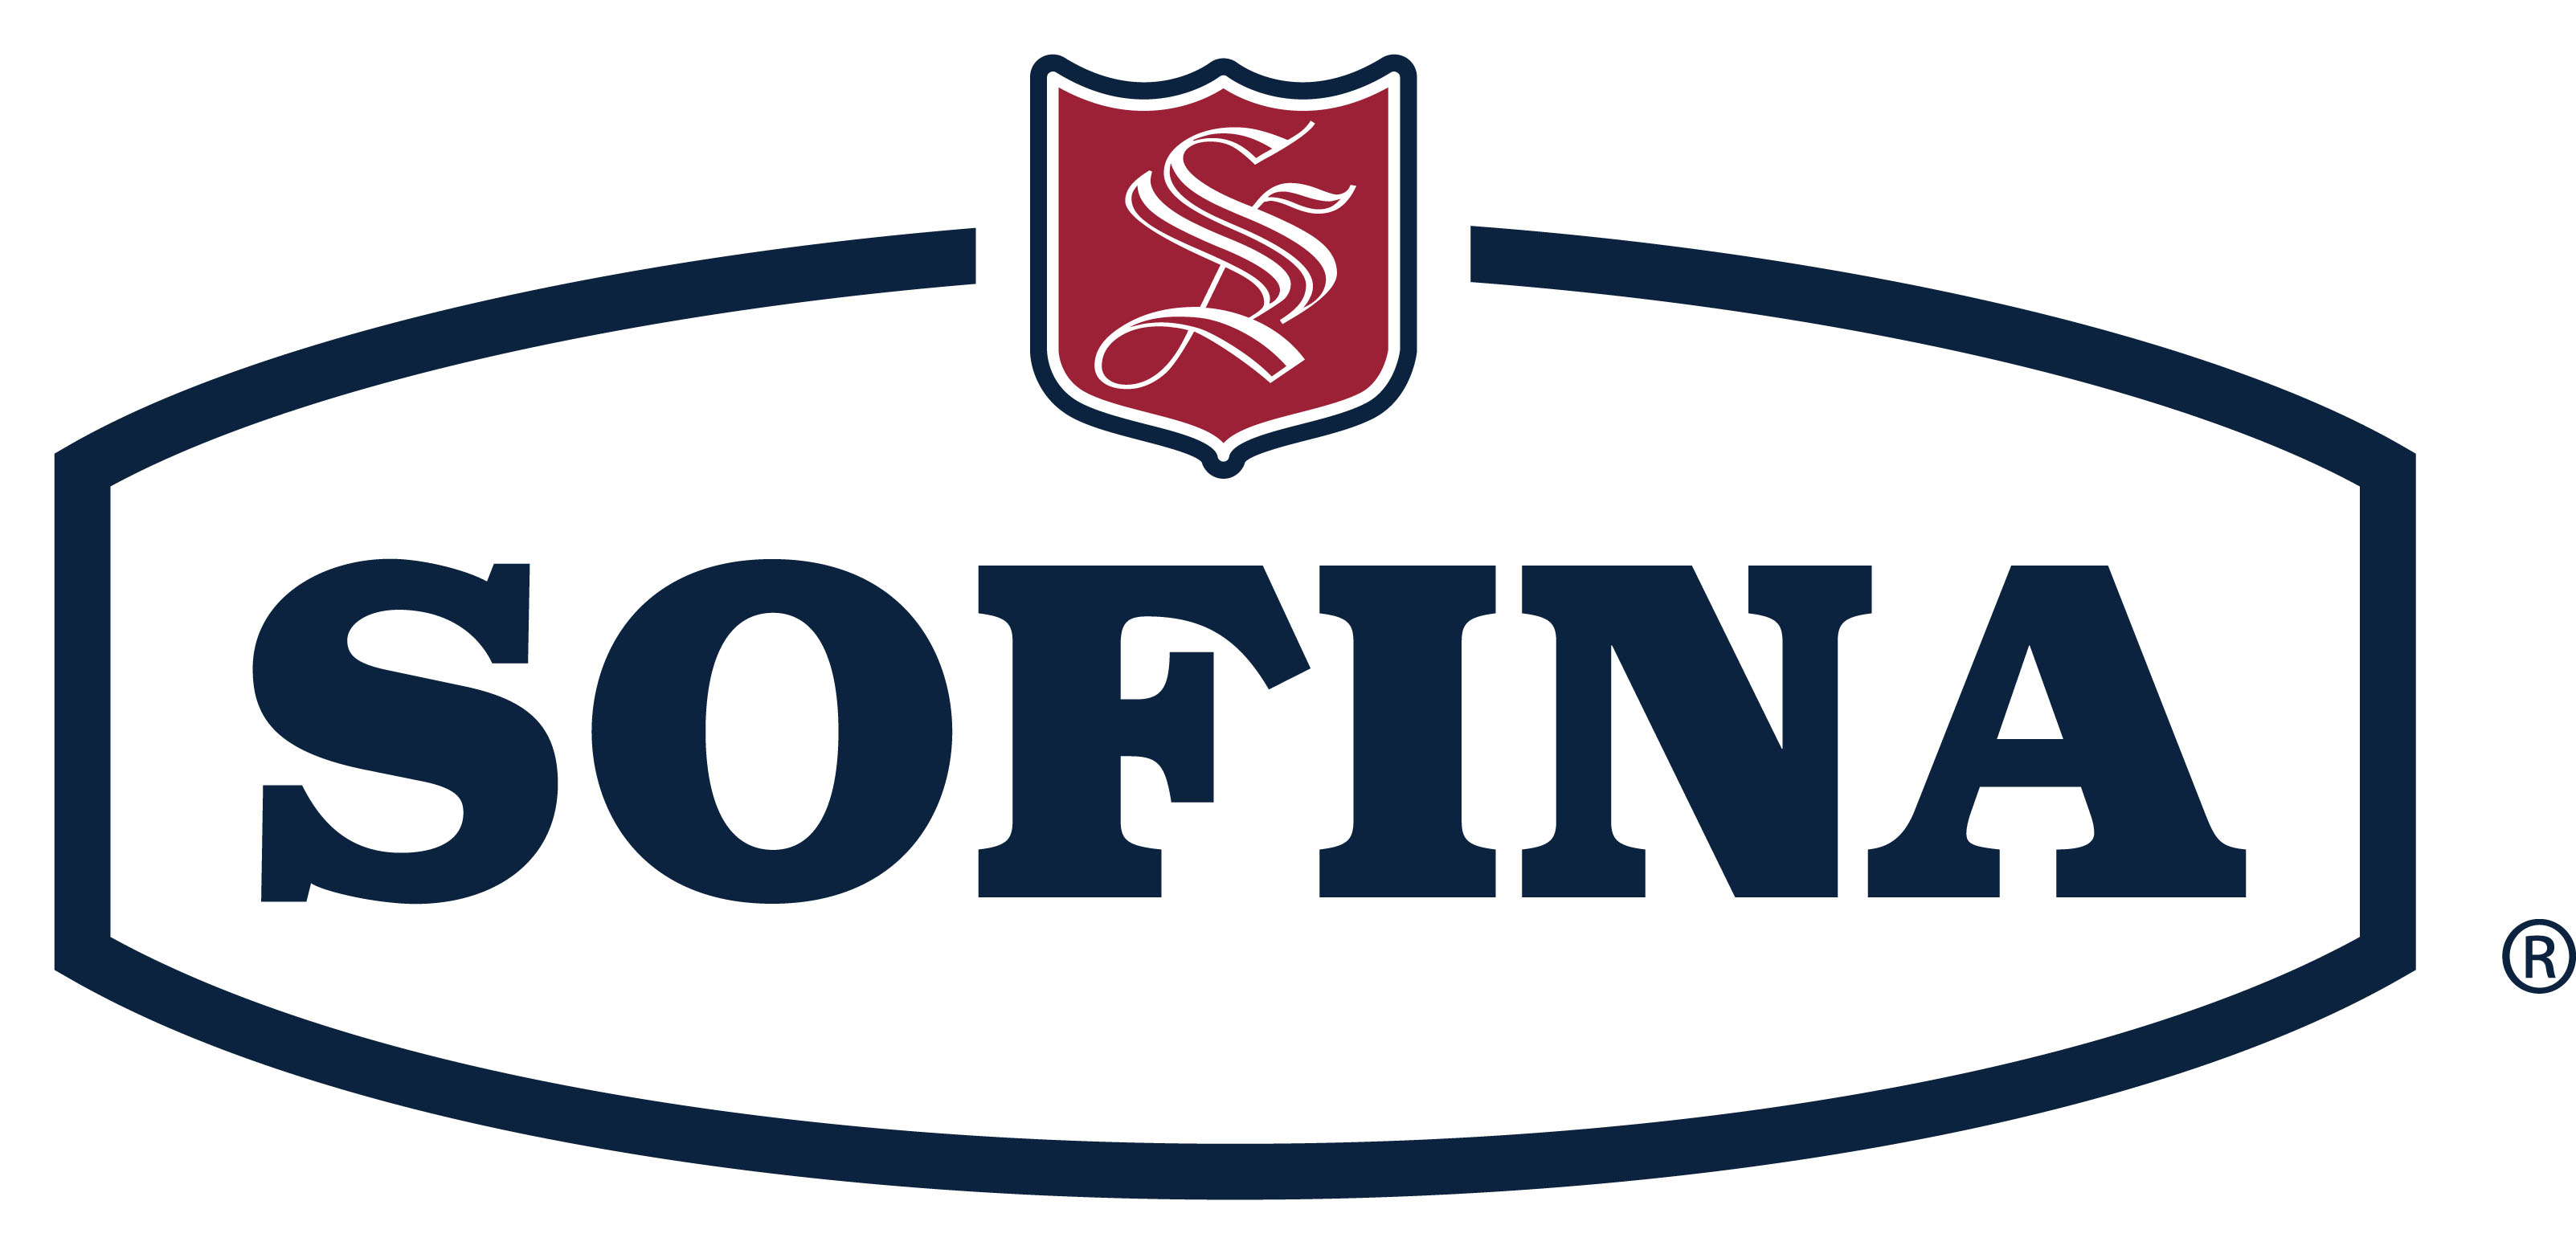 Sofina Foundation logo